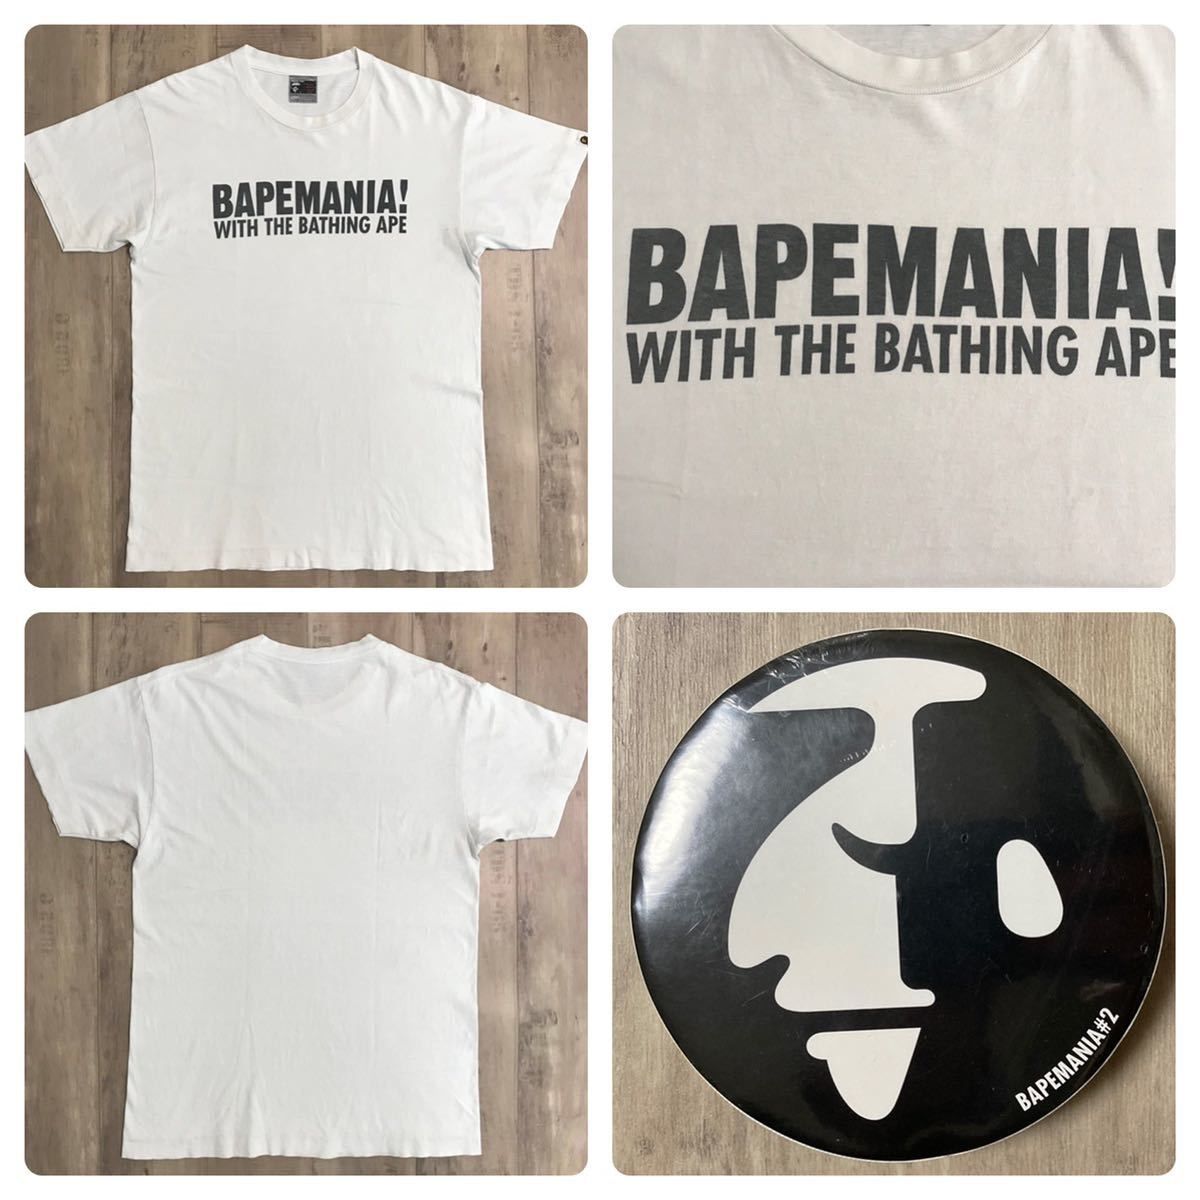 BAPE MANIA 圧縮 Tシャツ a bathing ape ベイプ エイプ